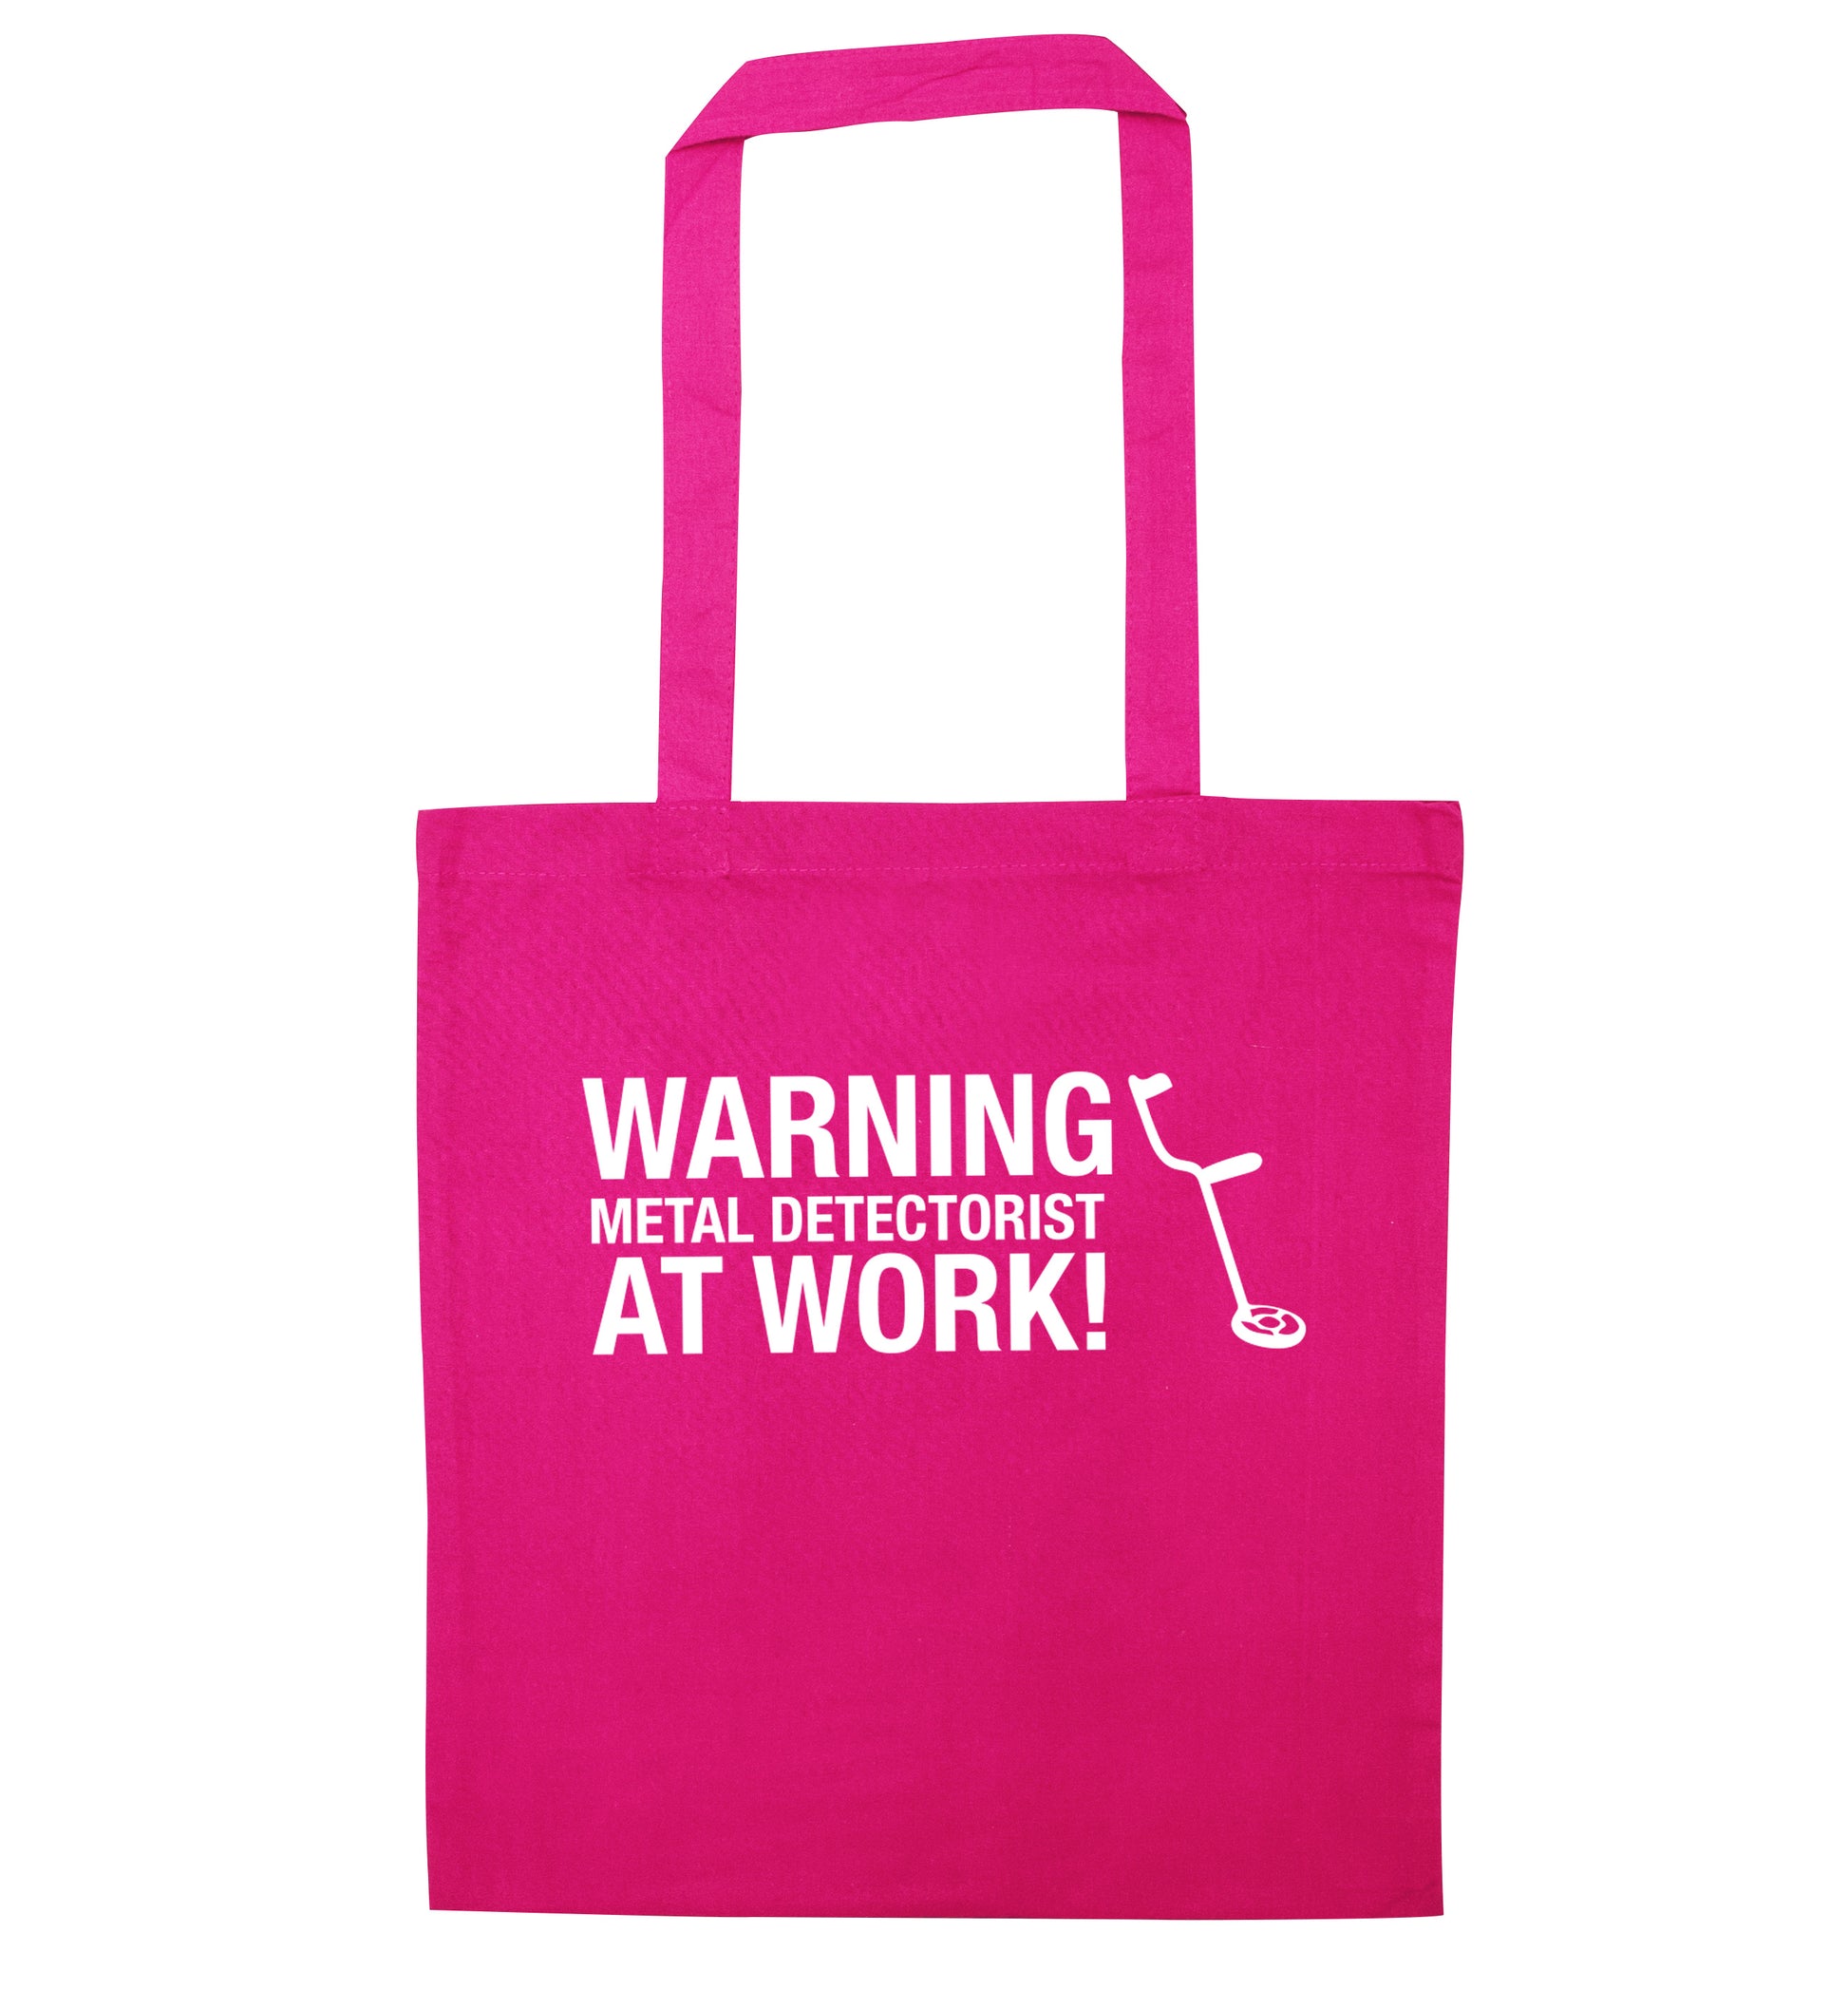 Warning metal detectorist at work! pink tote bag